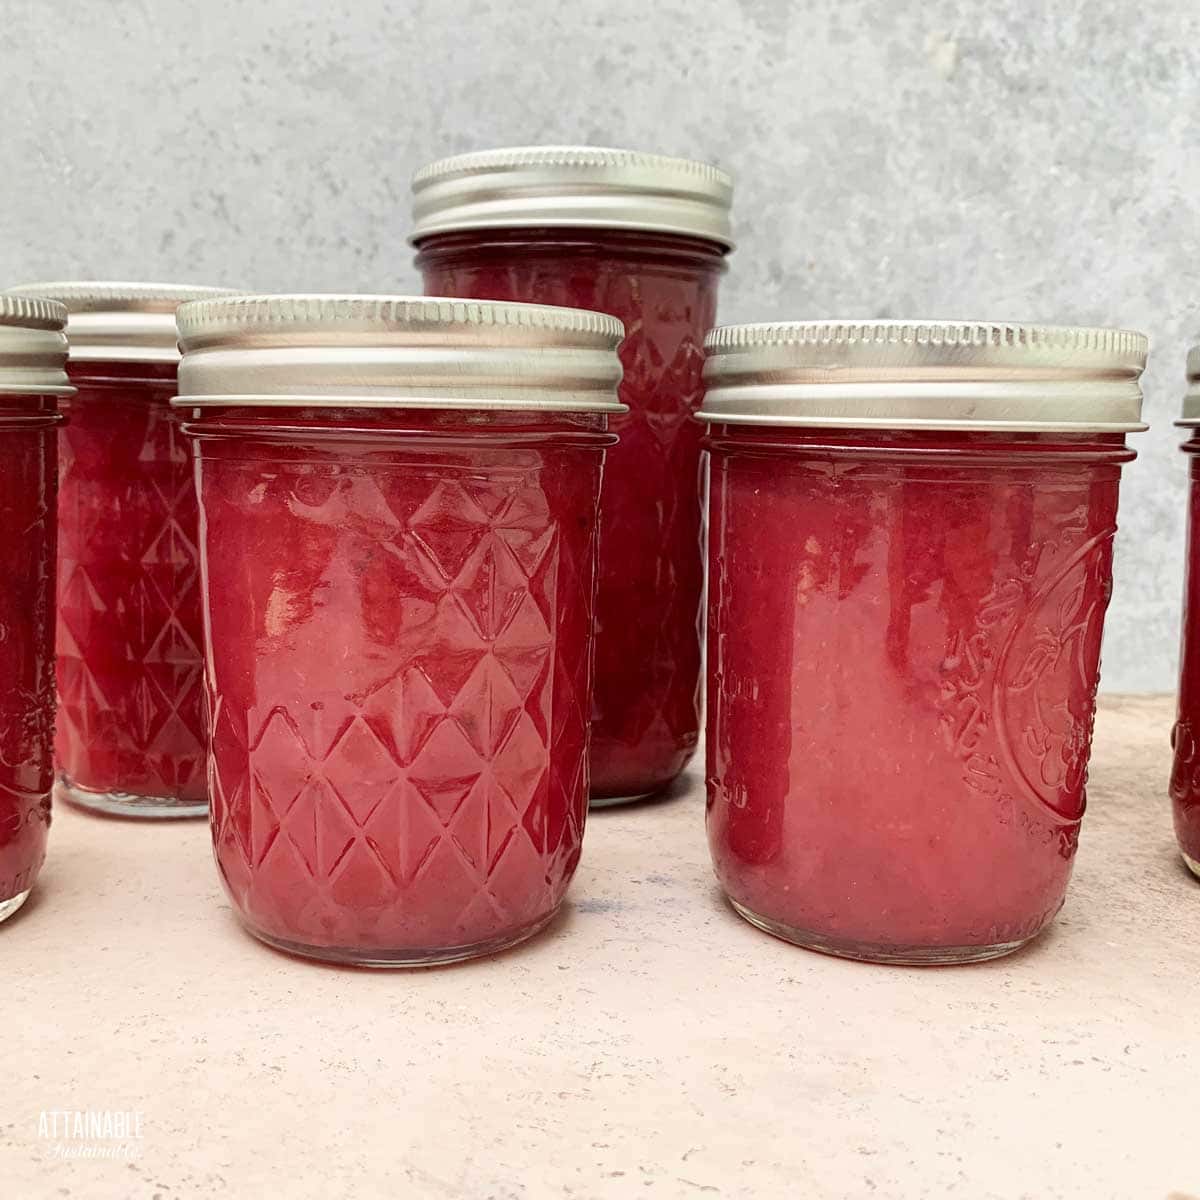 jars of pink jaboticaba jam.